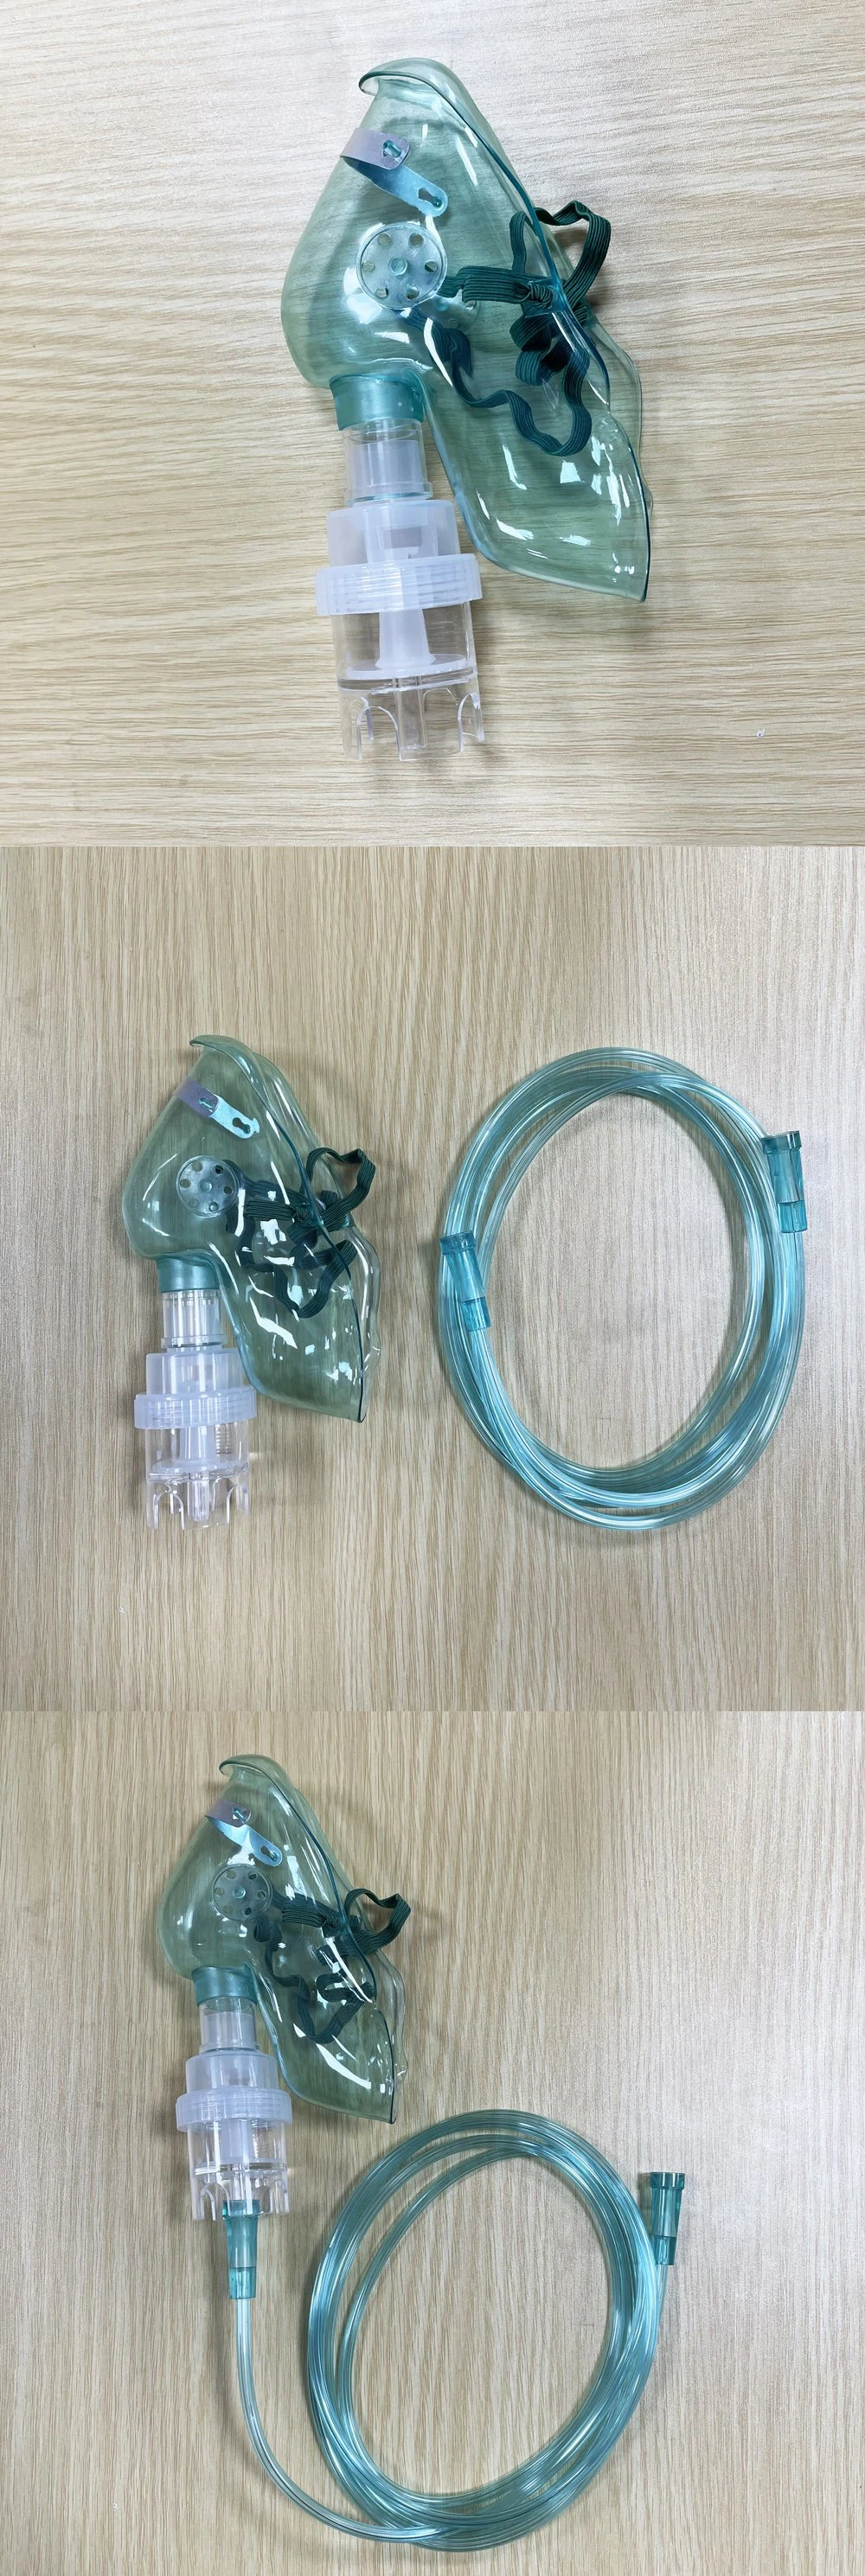 Oxygen Nebulizer Mask Disposable Medical Oxygen Nebulizer Face Mask with Oxygen Tube with CE, FDA Green Nebulizer Kit Nebulizer Set